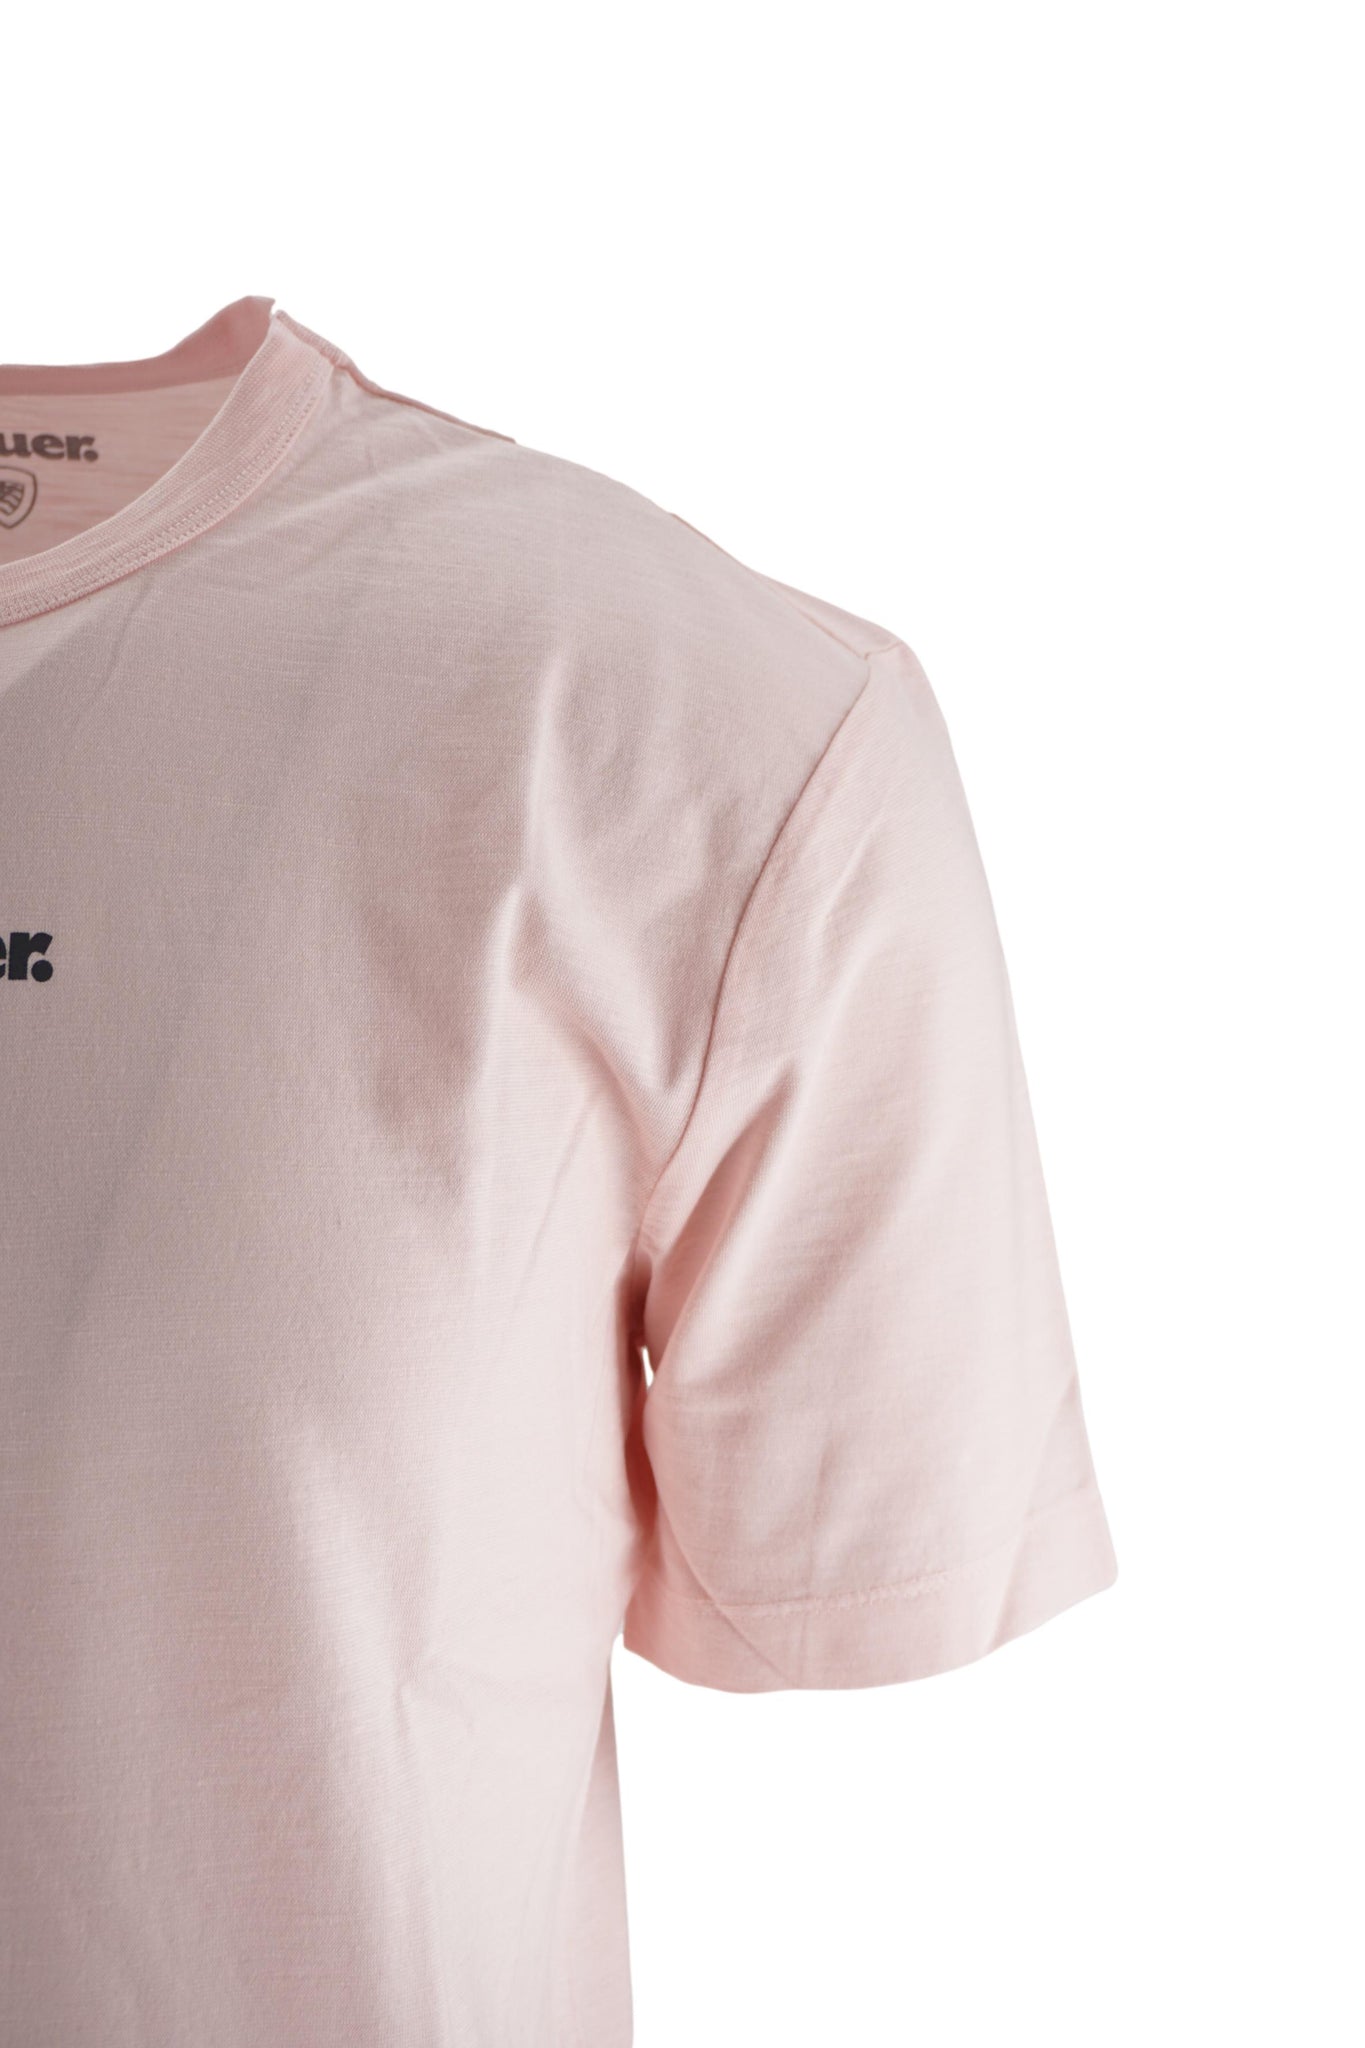 T-Shirt con Stampa Blauer / Rosa - Ideal Moda